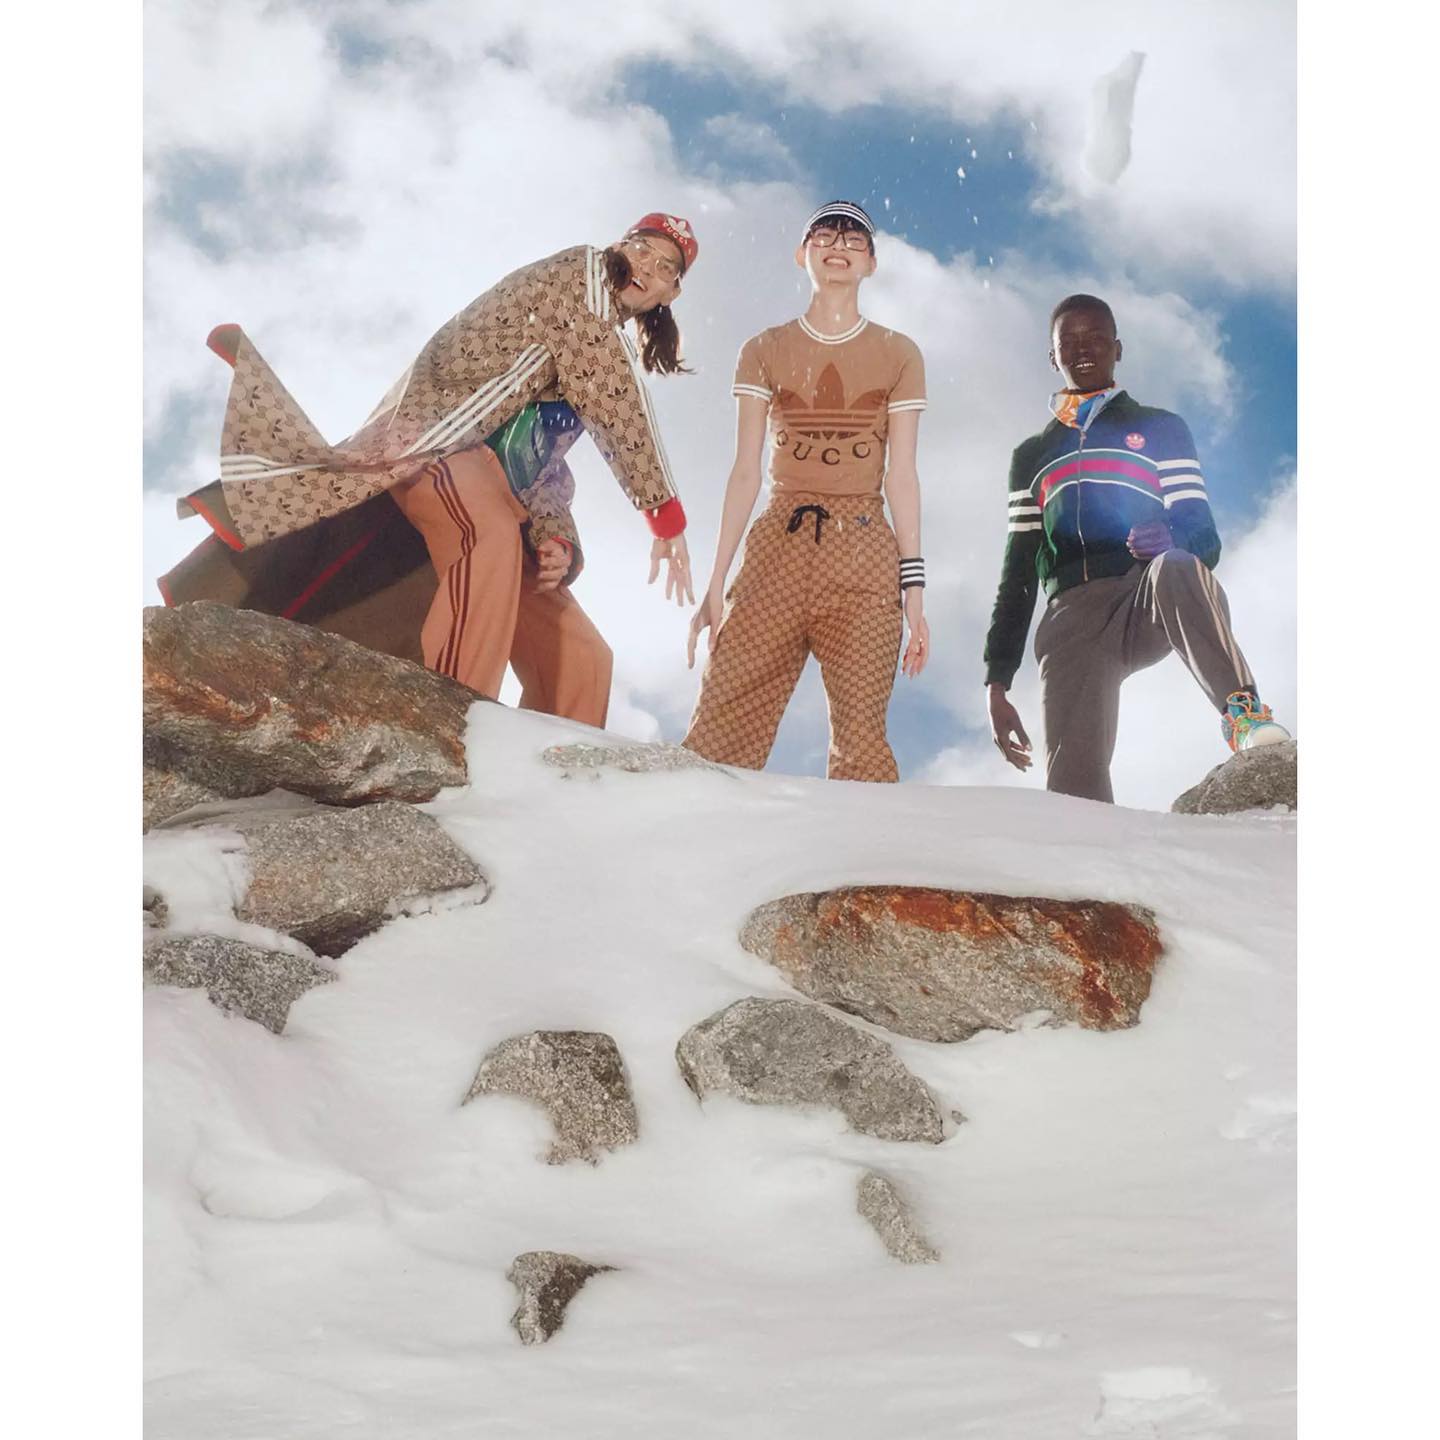 Moritz K (@moritz_m_kr ) for Gucci Après Ski Campaign. Video direction by Akinola Davies, photography by Mark Peckmezian, styling by Emma Wyman, hair by Shiori Takahashi, make-up by Daniel Sallstrom.